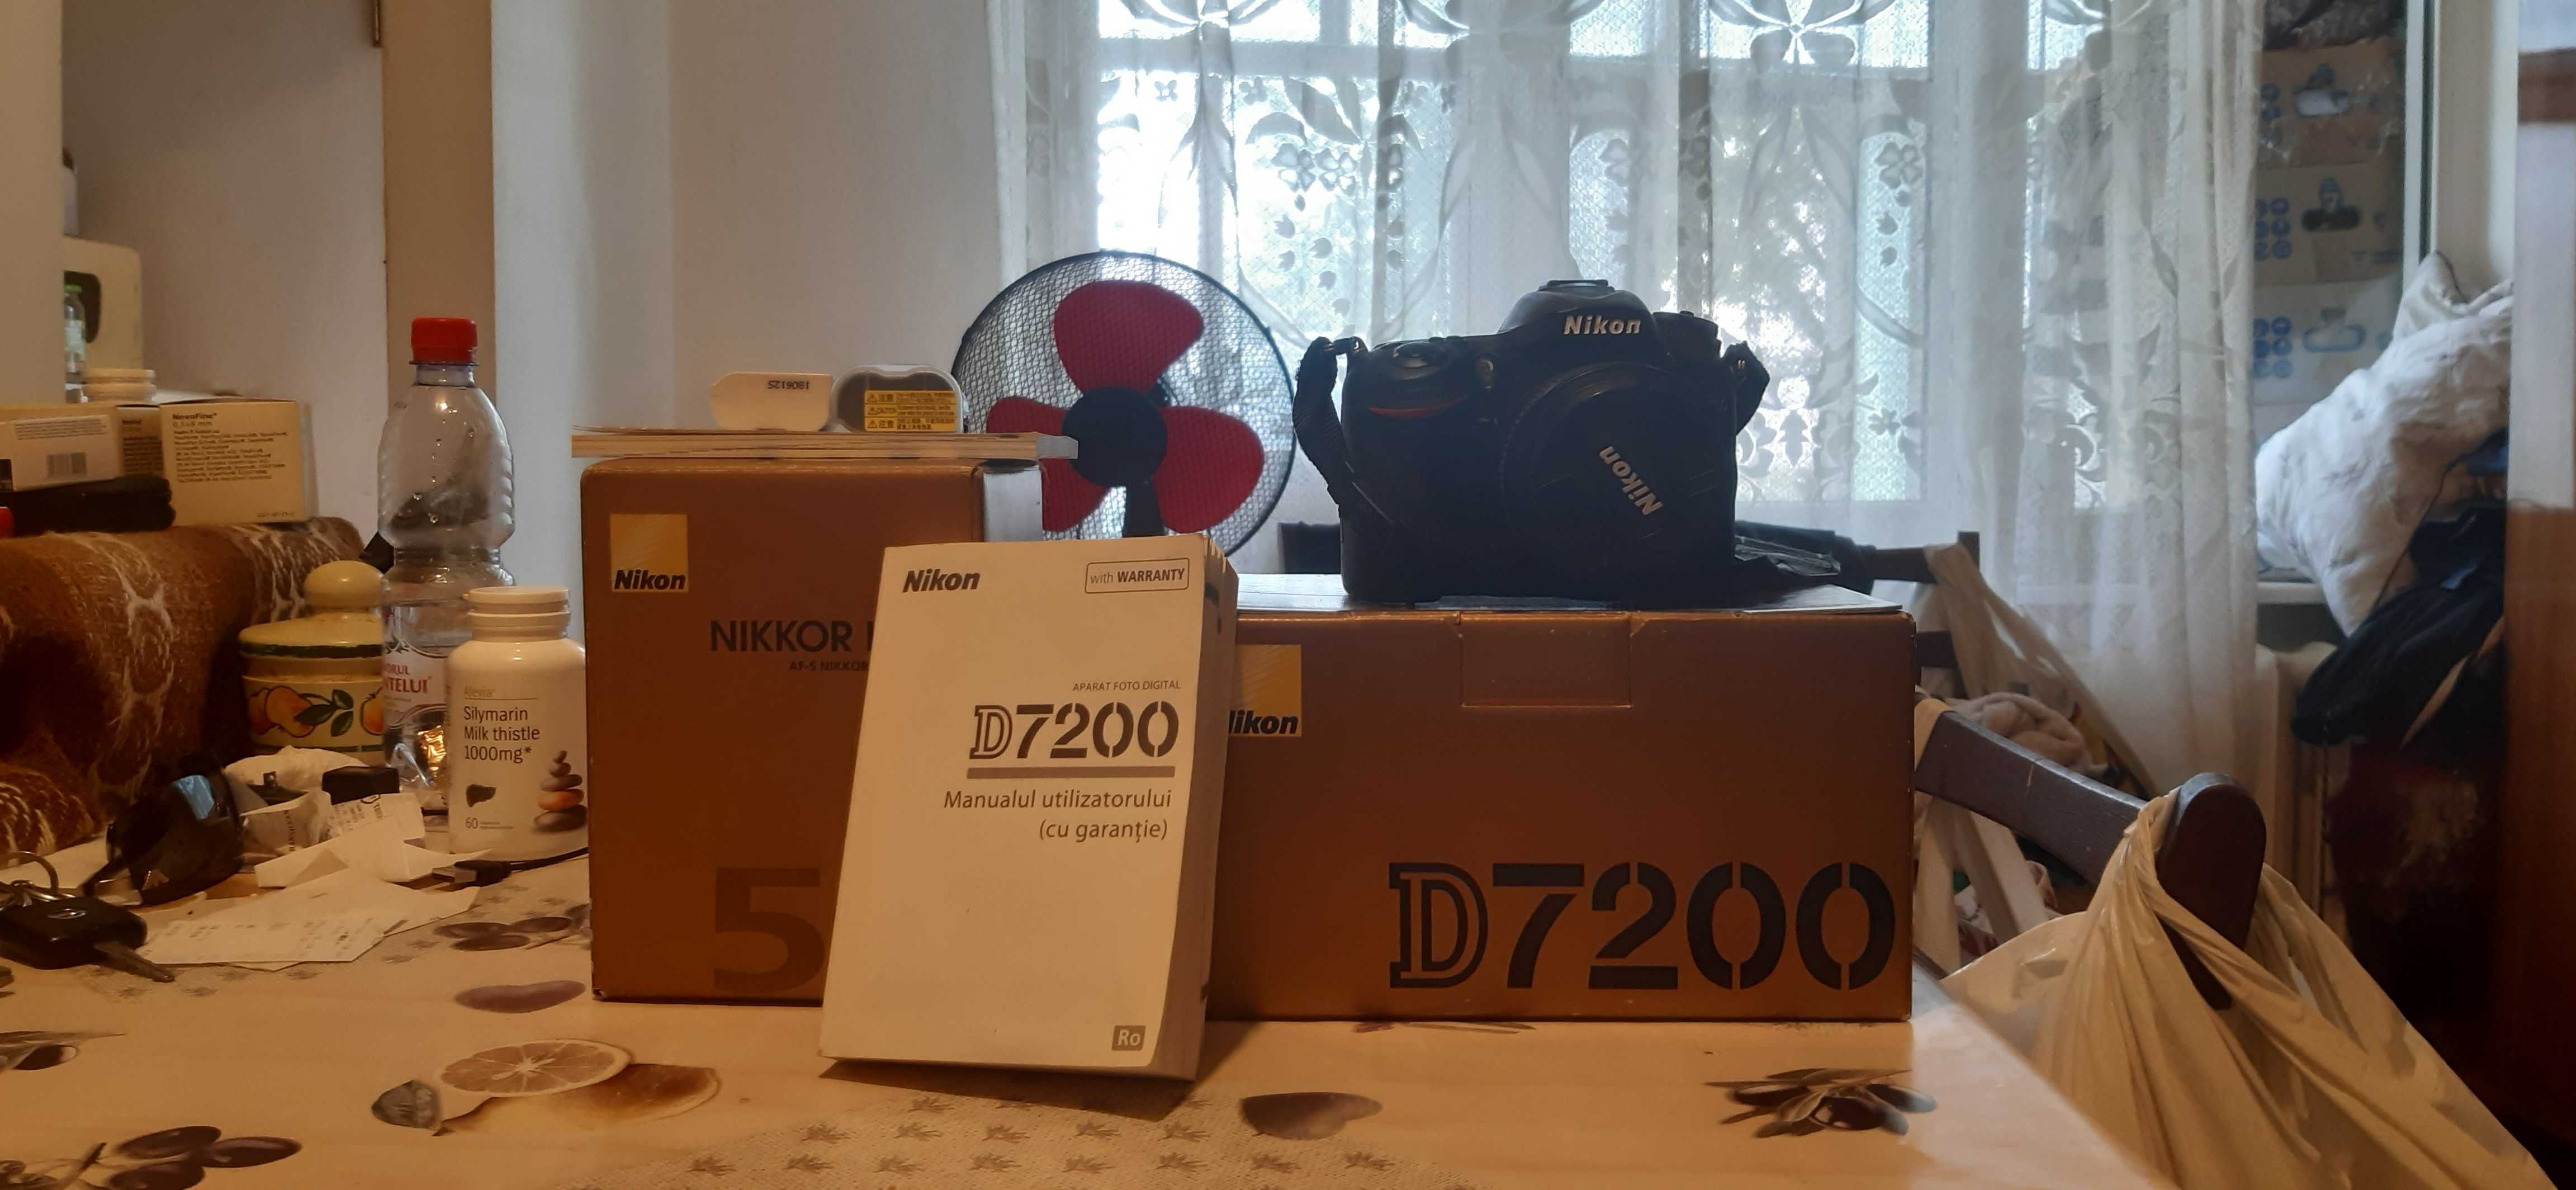 Aparat foto Nikon D7200 Impecabil ca nou